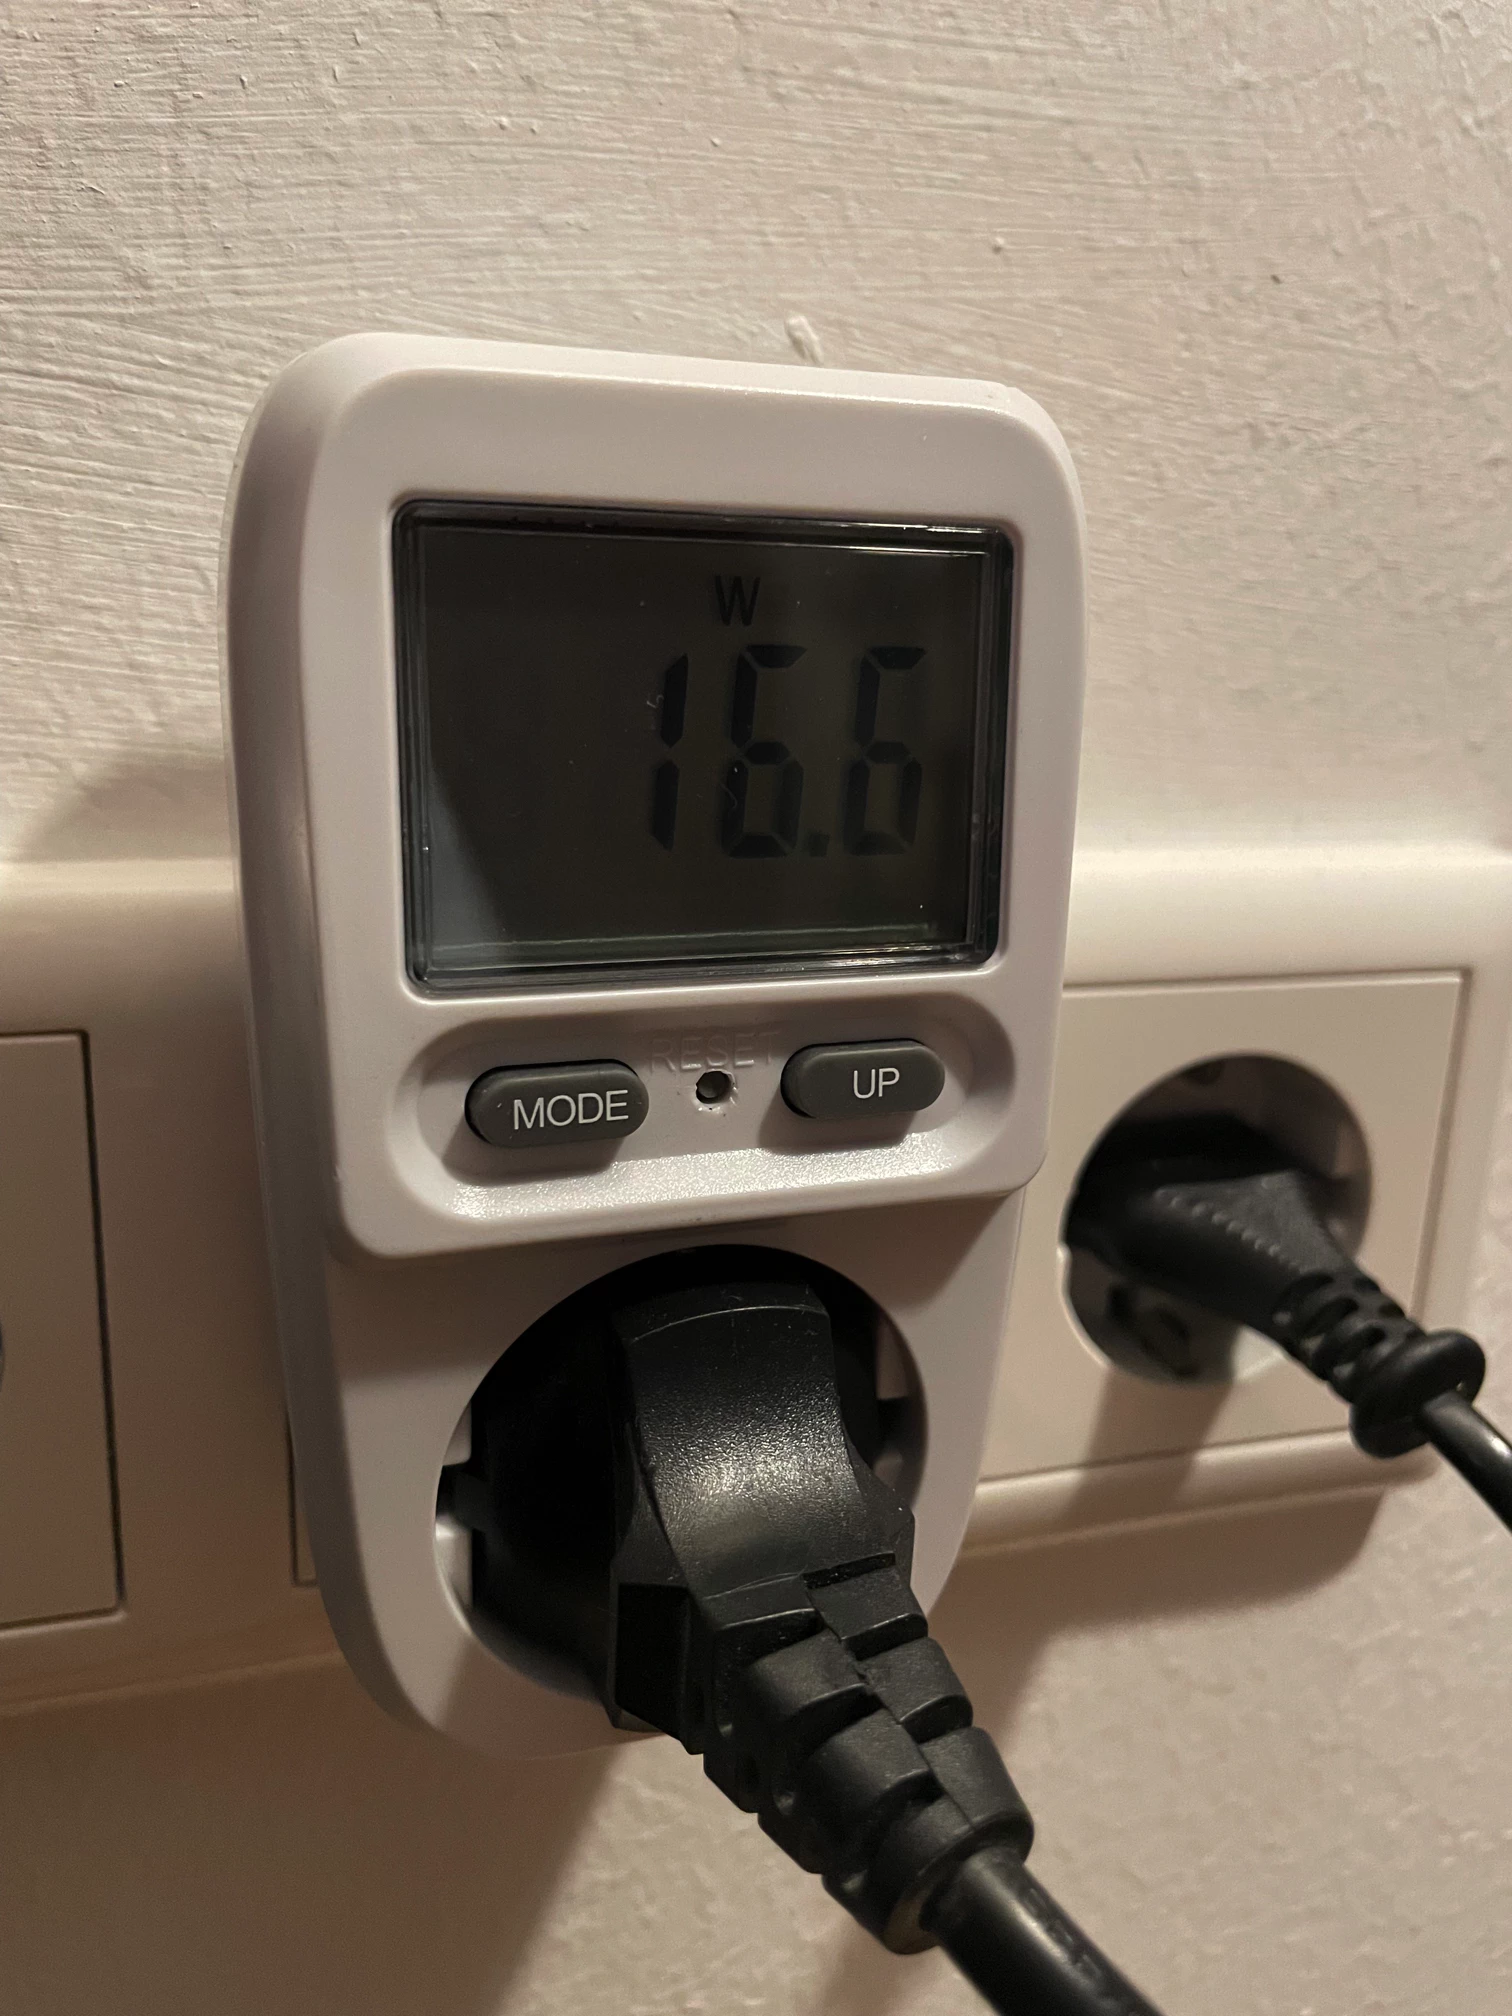 Power meter based electic socker showing 16W usage